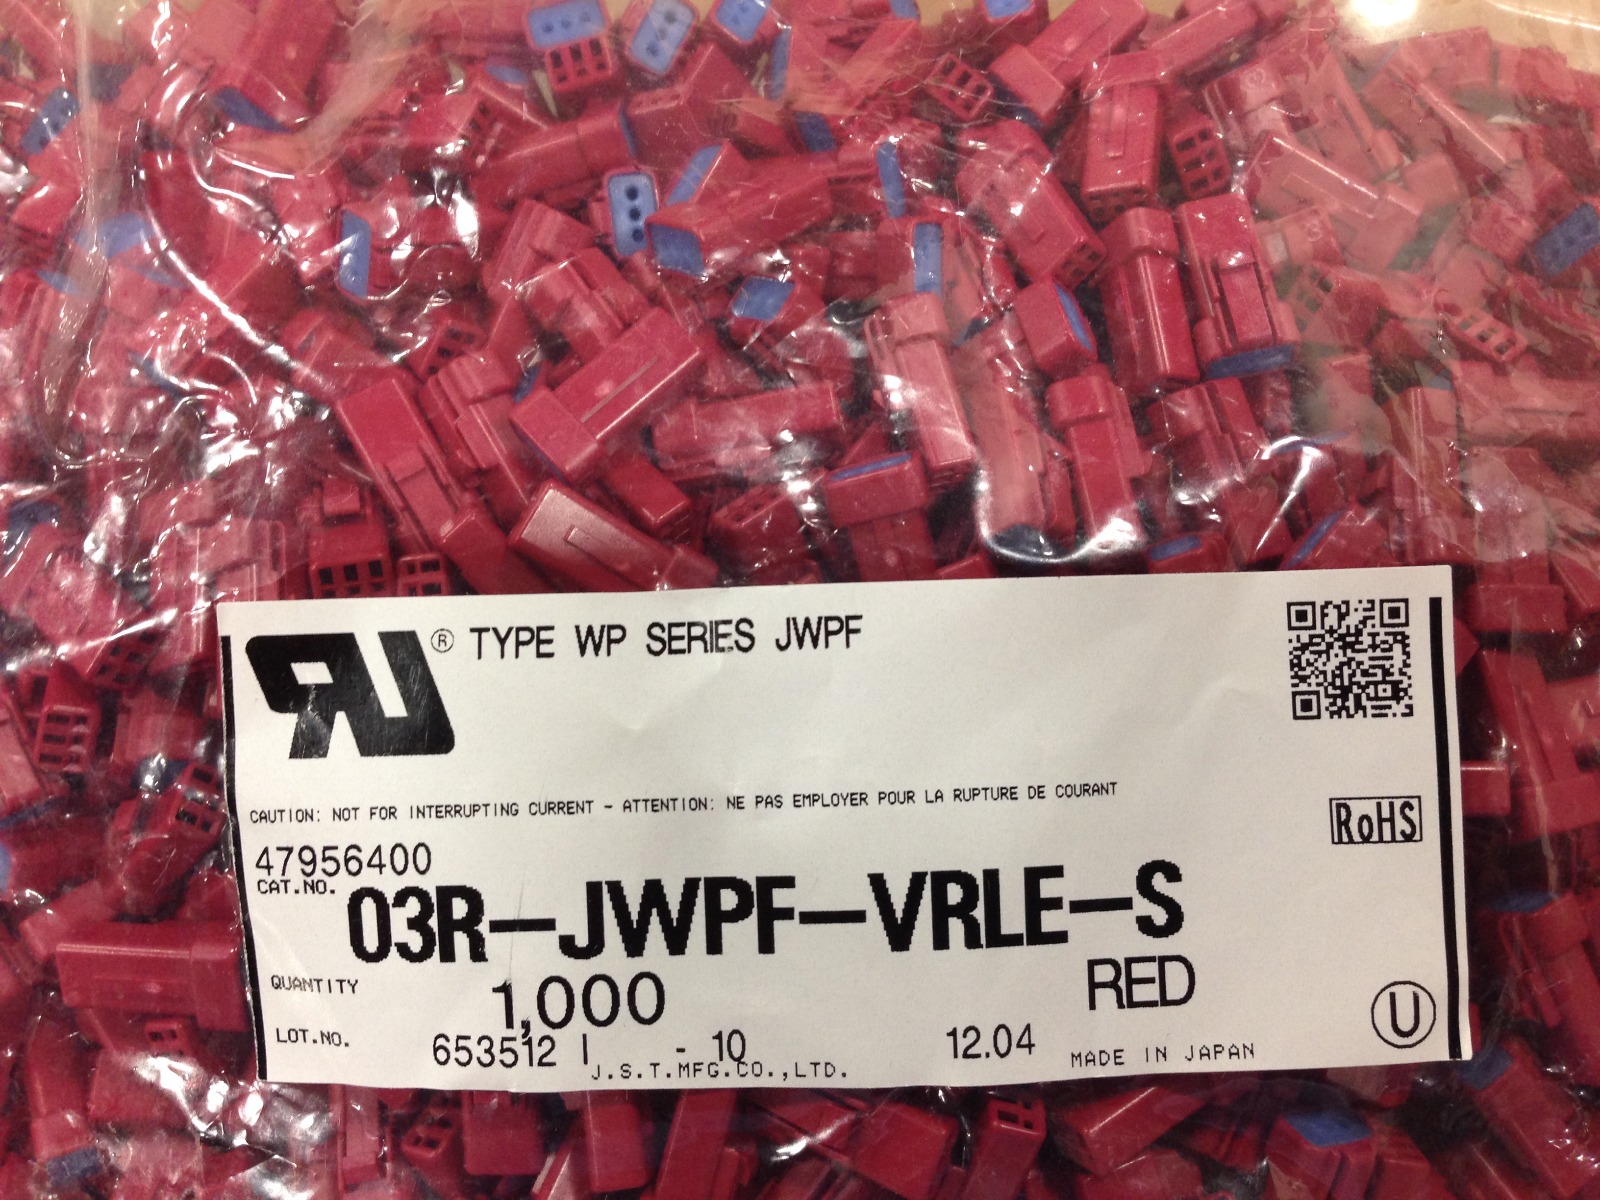 03R-JWPF-VRLE-S